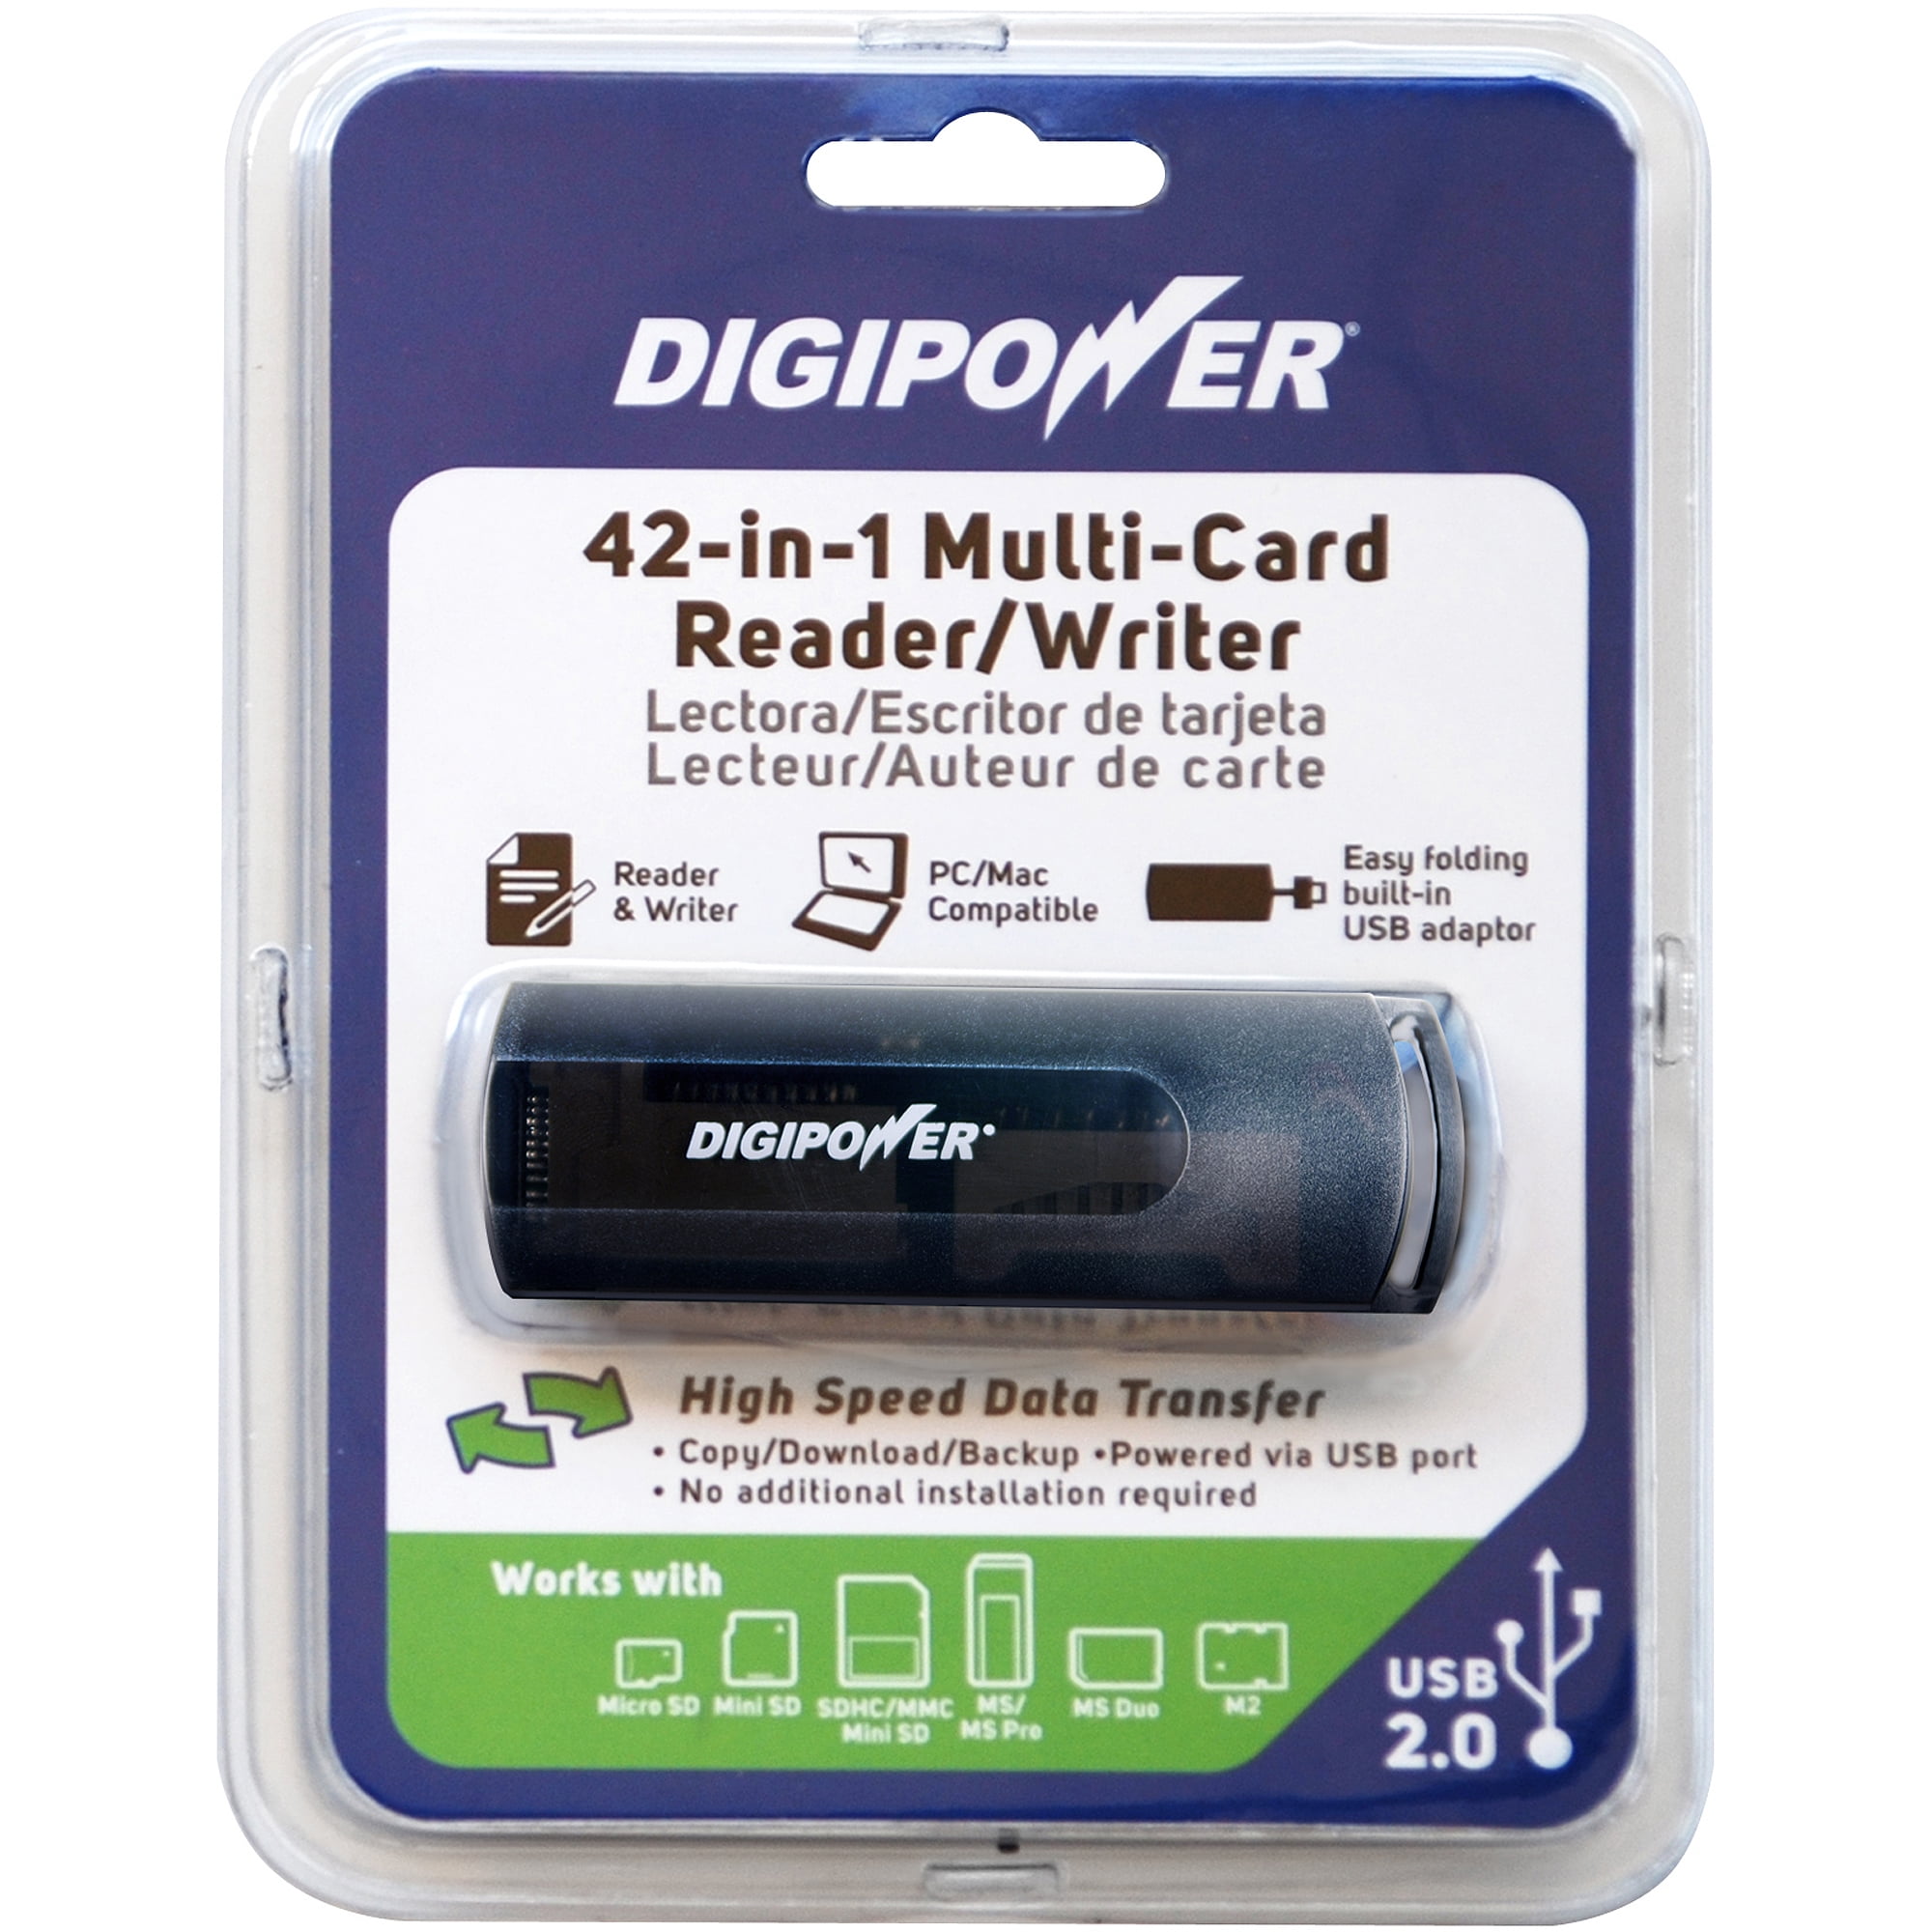 Realtek USB 2.0 Card Reader. Digipower RPM 1522. Ms ms pro купить